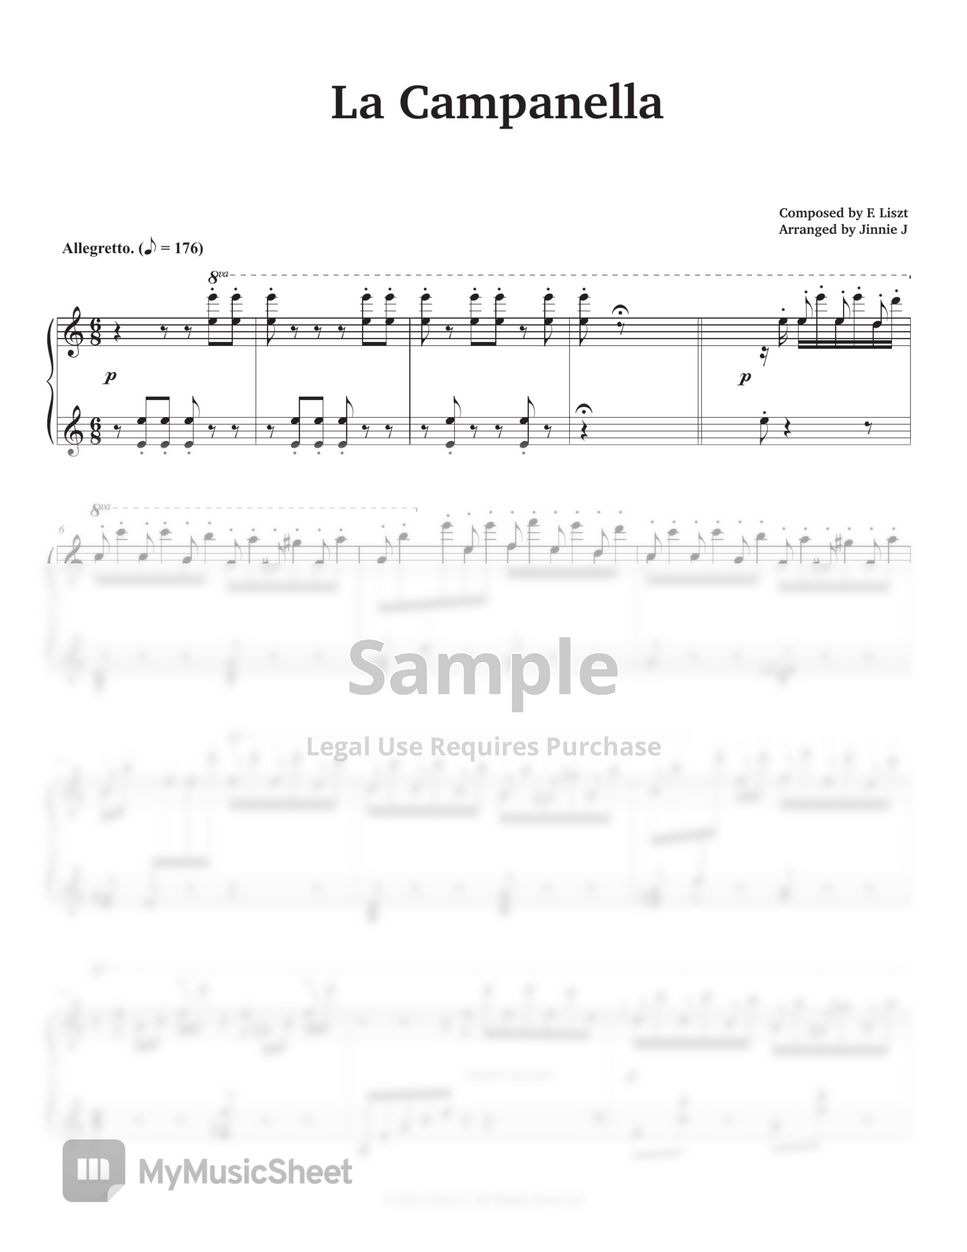 F. Liszt (리스트) - La Campanella (라 캄파넬라) (중상급악보, Am key) by Jinnie J